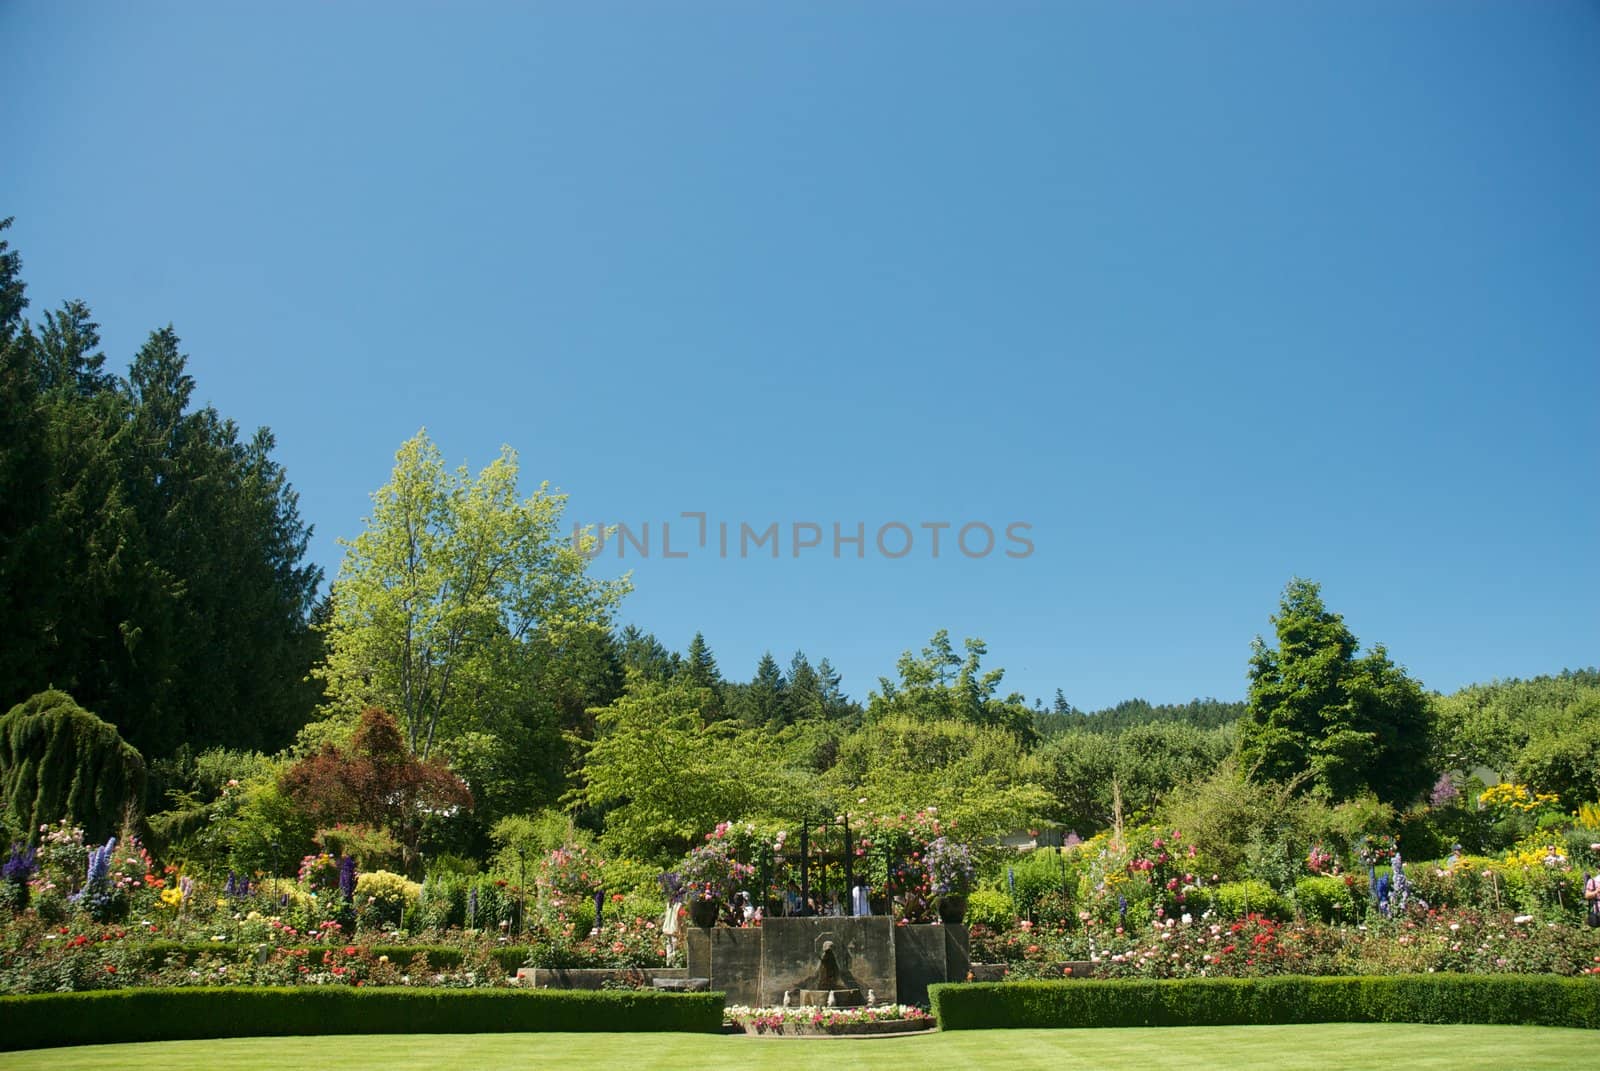 Butchart Garden in Victoria, British Columbia